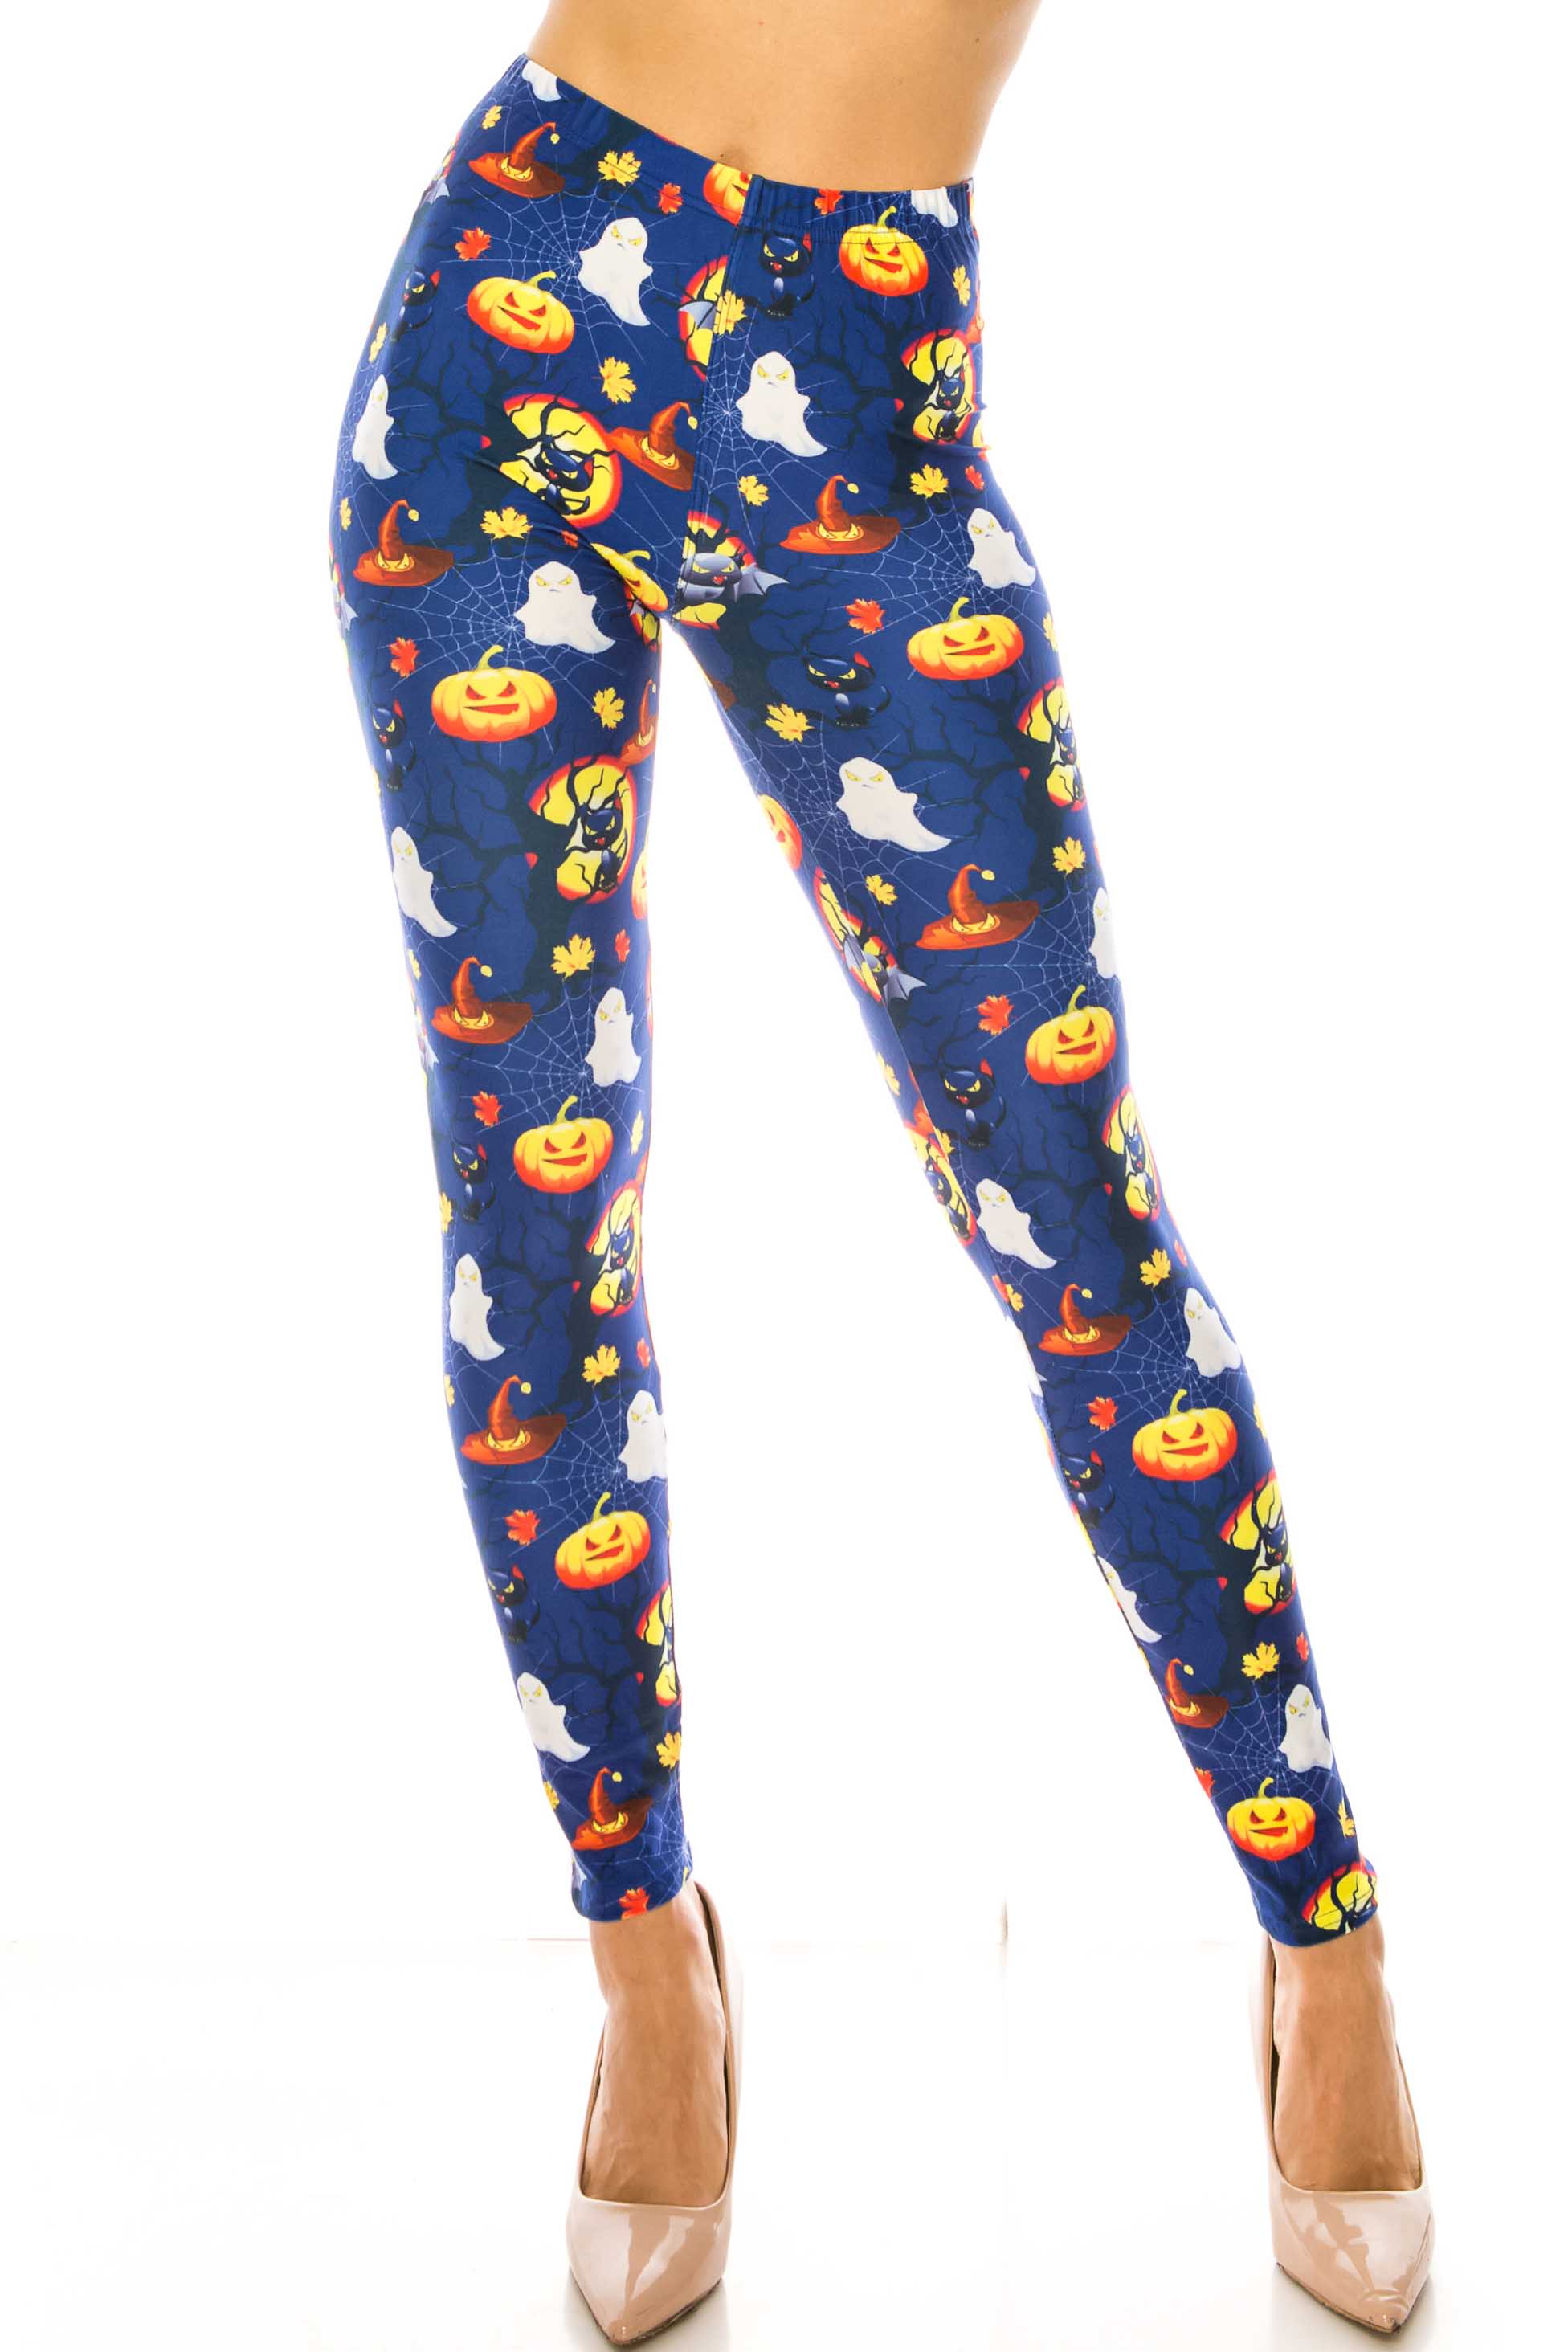 Wholesale Creamy Soft Halloween Critters Leggings - USA Fashion™